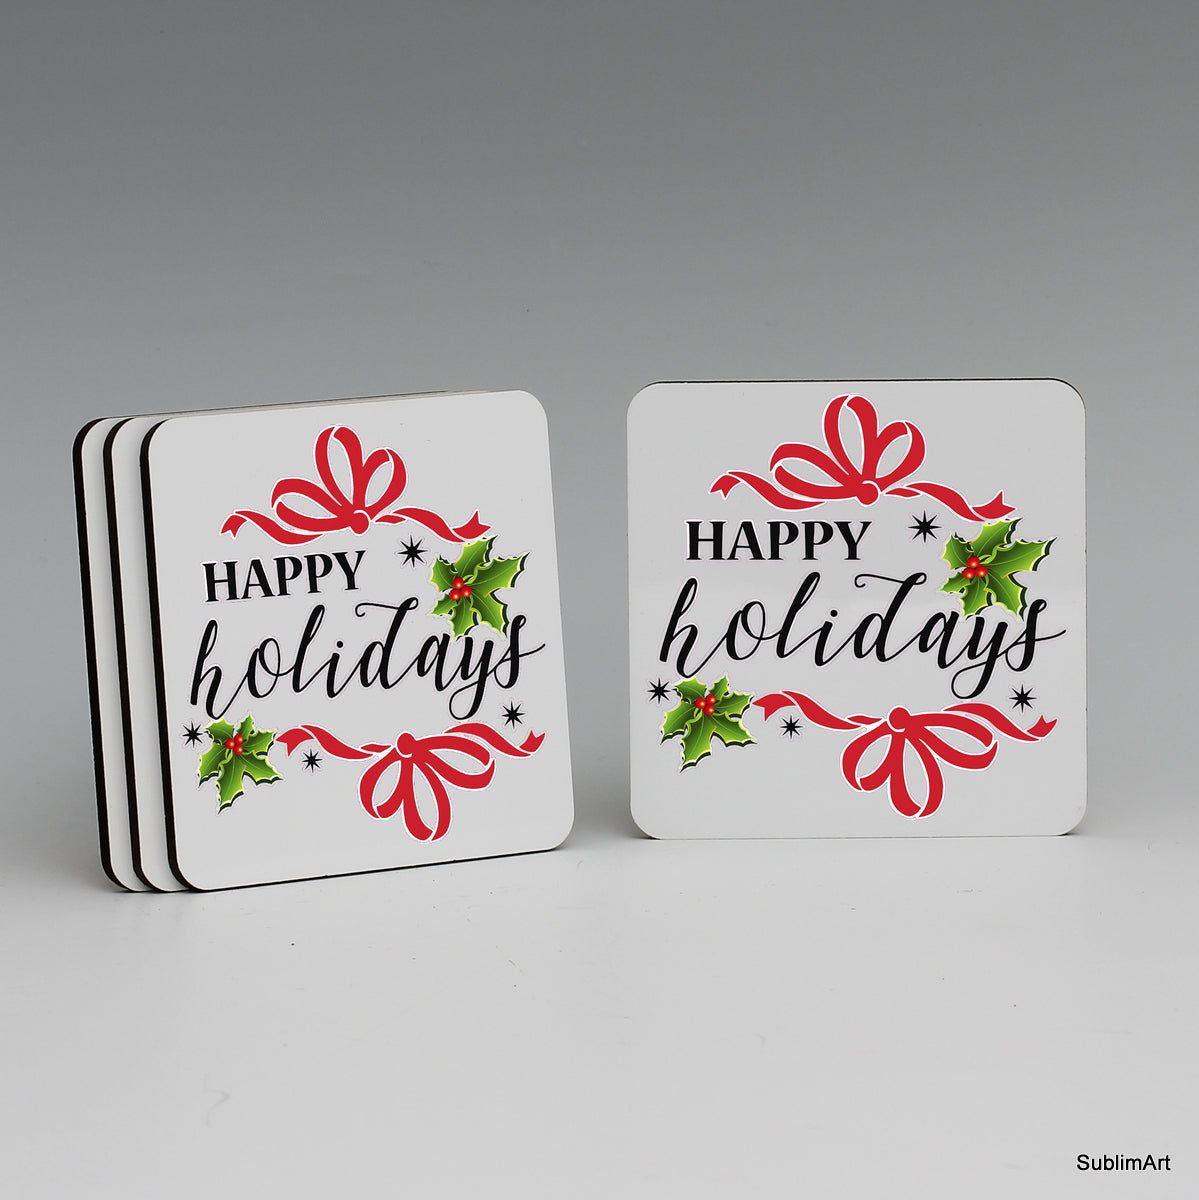 SUBLIMART: MDF Hardboard Set of 4 Coasters - Design: Holidays 02